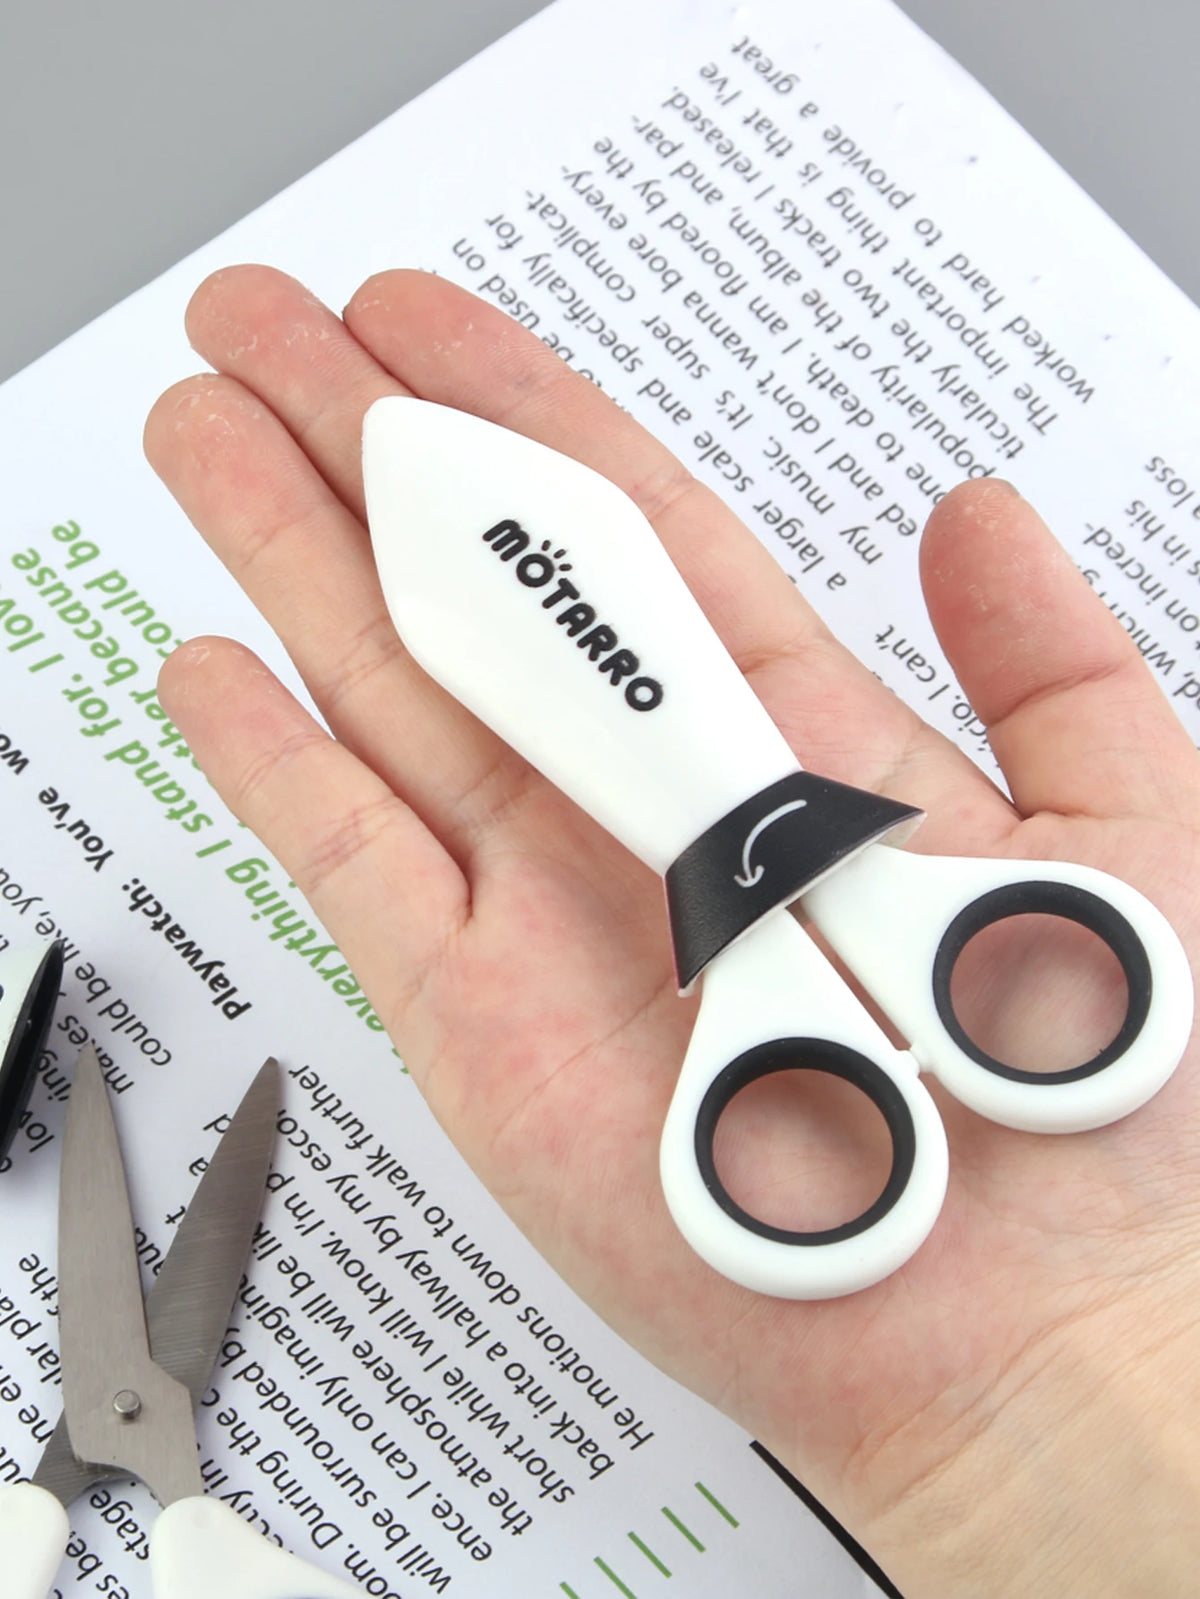 MOTARRO 1Pc Random 115mm Mini Safety Round Head Plastic Scissors Student Kids Paper Cutting School Supplies